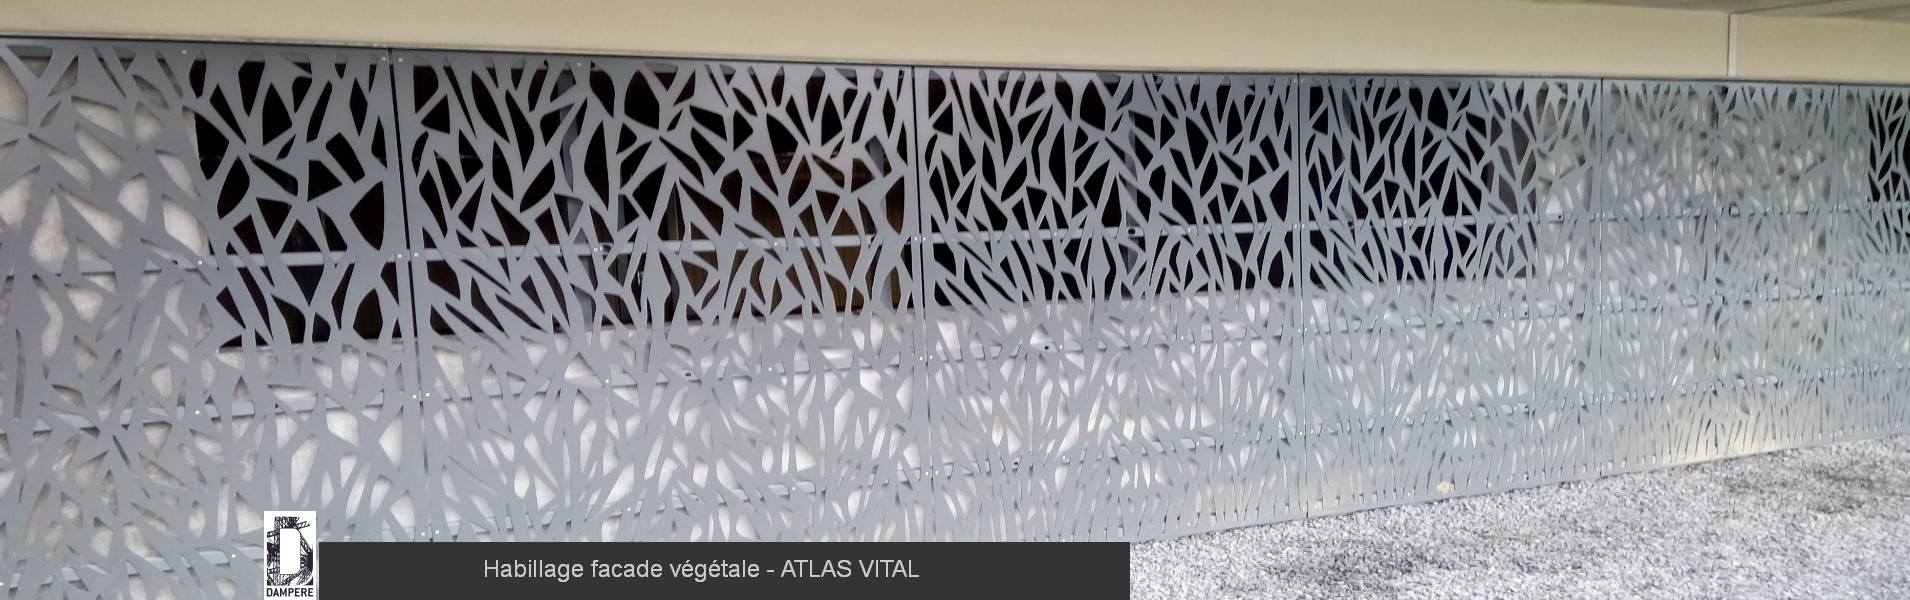 Habillage facade vegetale ATLAS VITAL 3